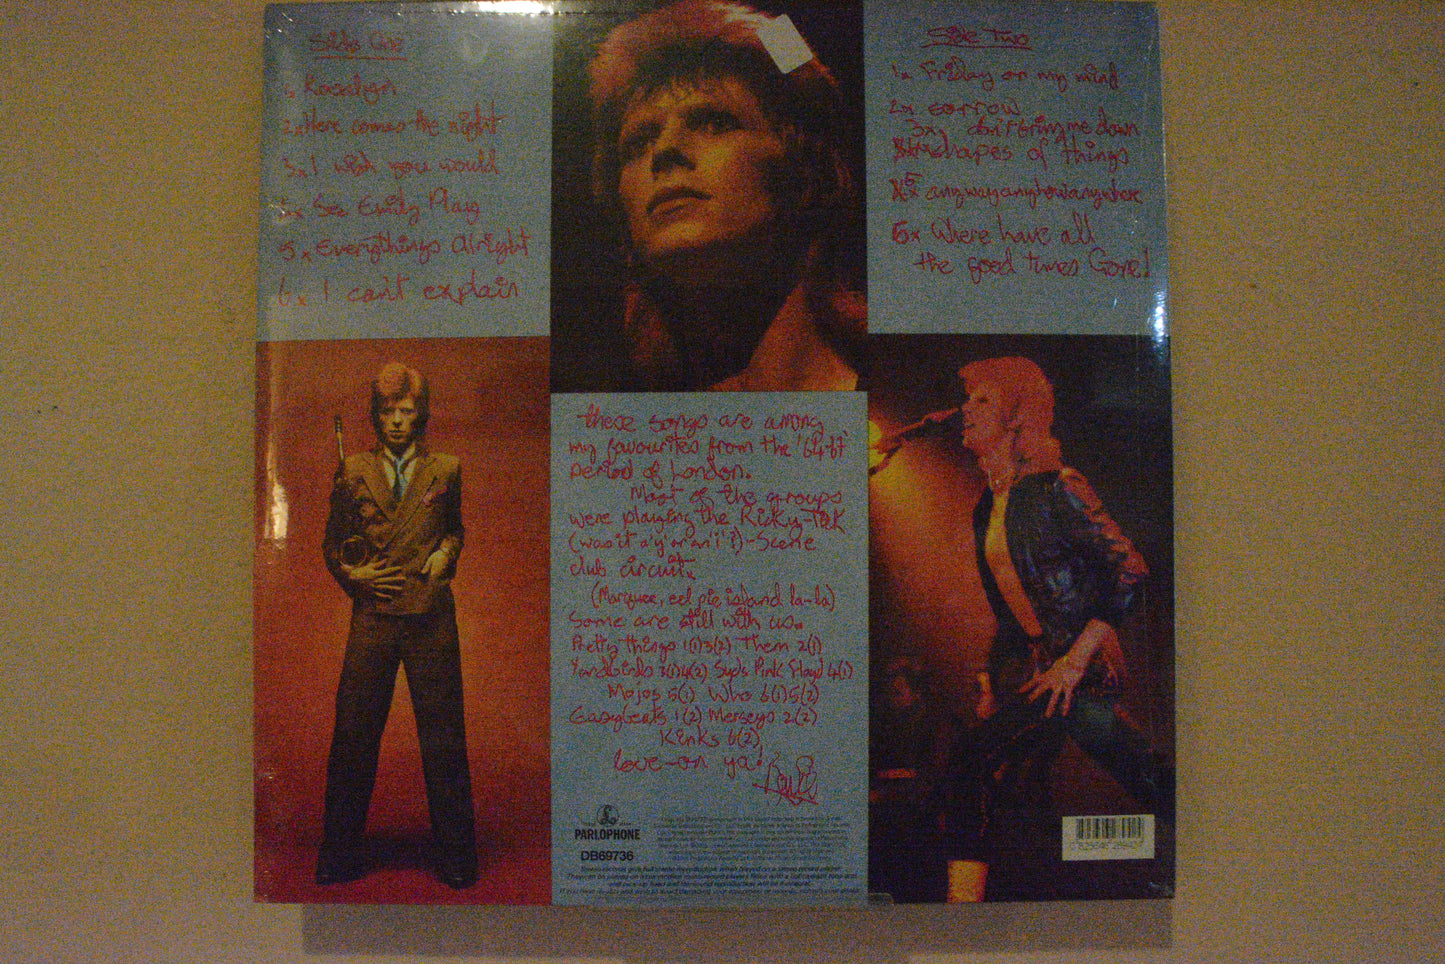 David Bowie - Pin Ups LP